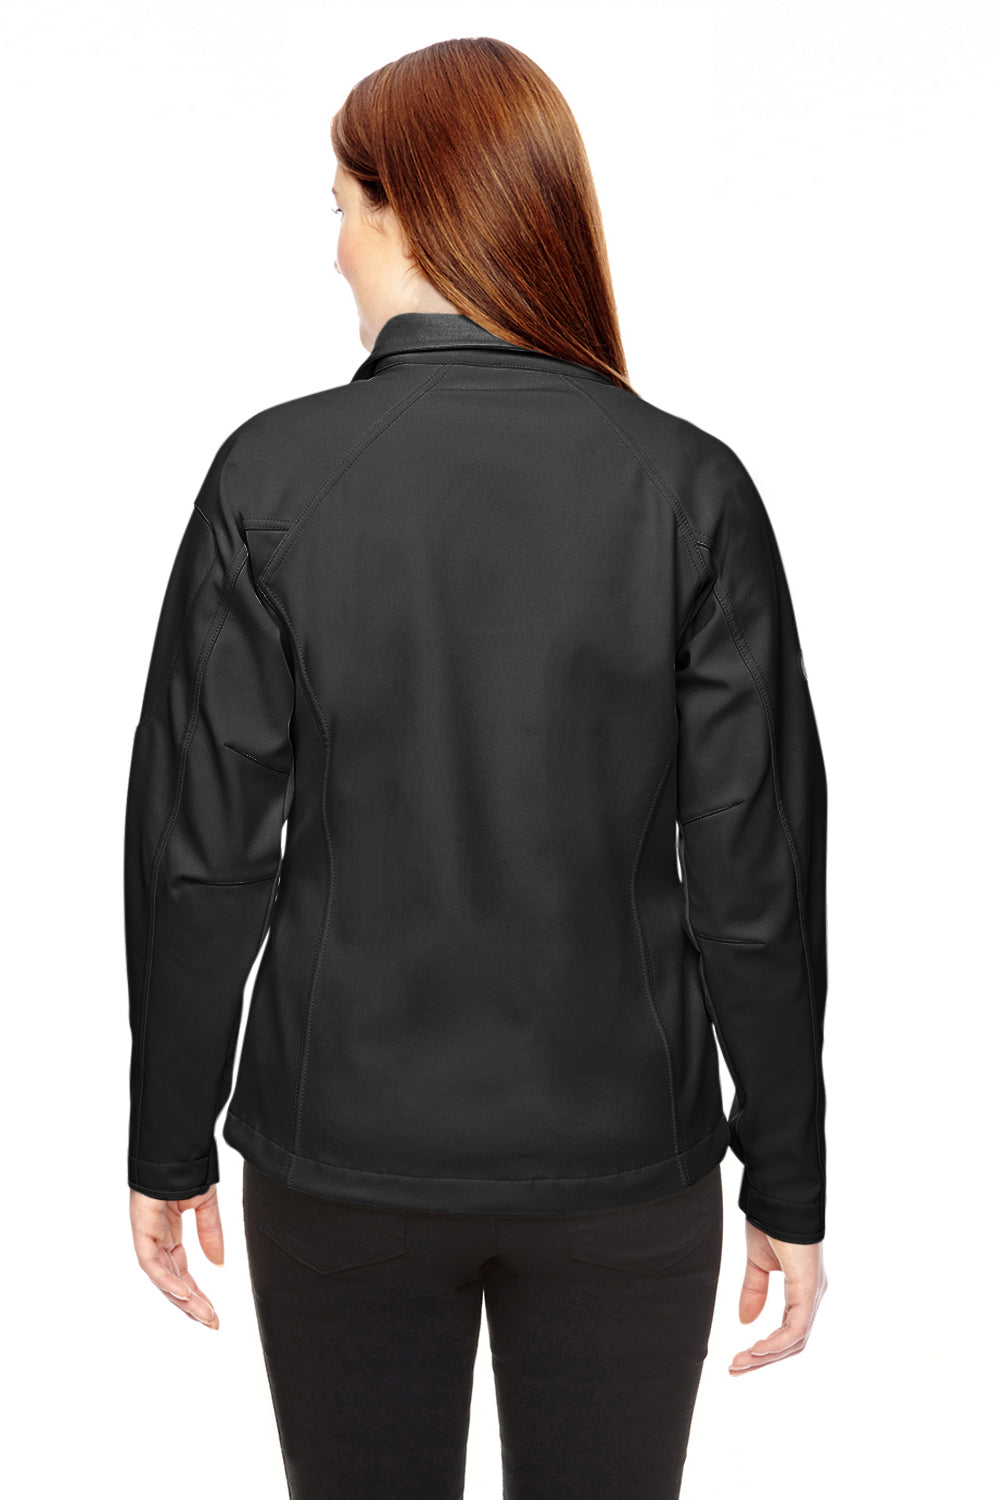 Marmot 85000 Womens Gravity Wind & Water Resistant Full Zip Jacket Black Back